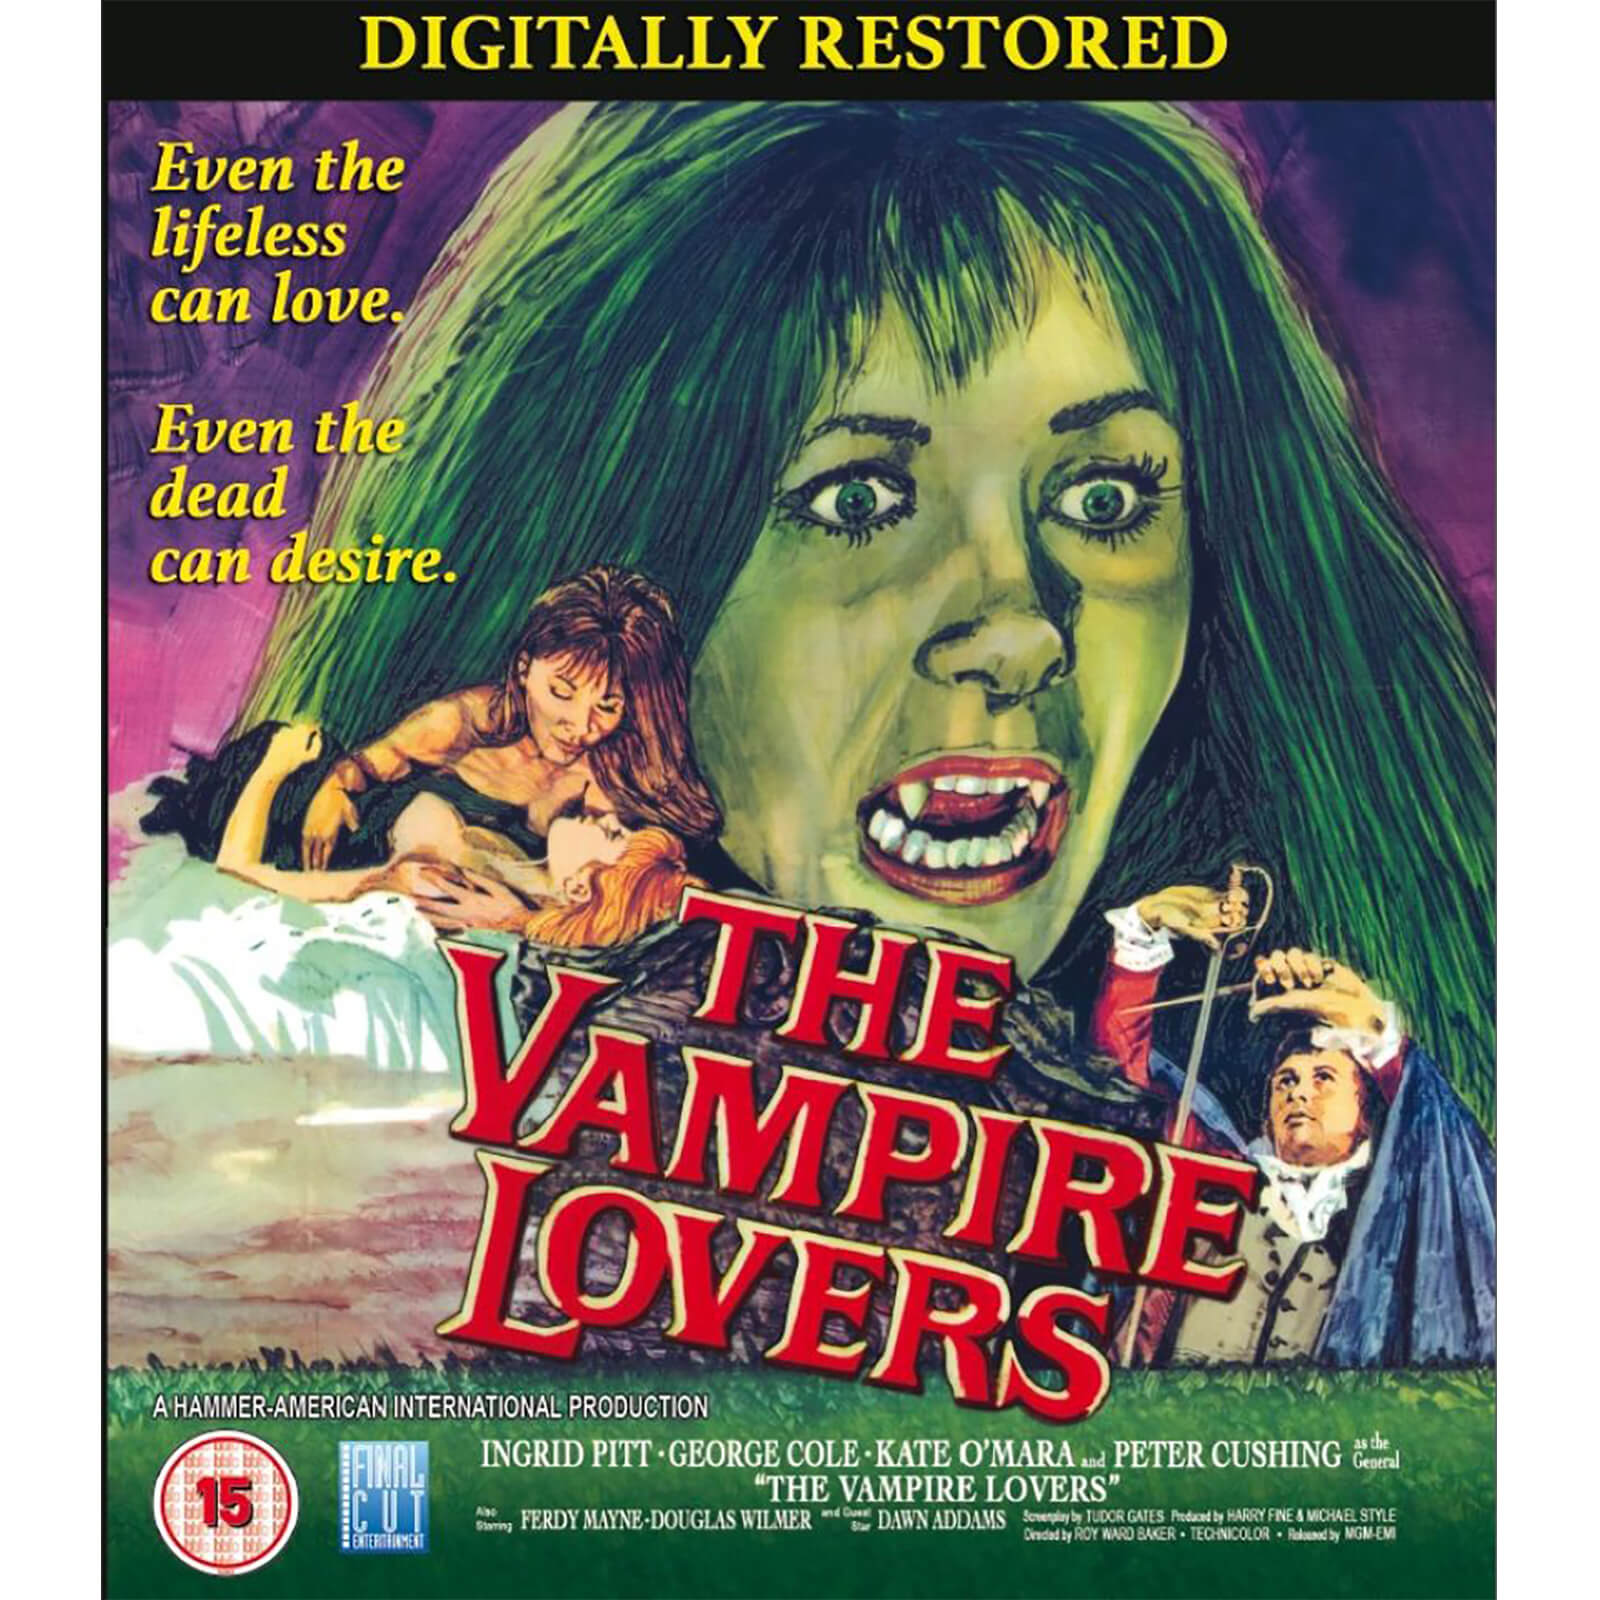 The Vampire Lovers - Digitally Restored von Final Cut Entertainment